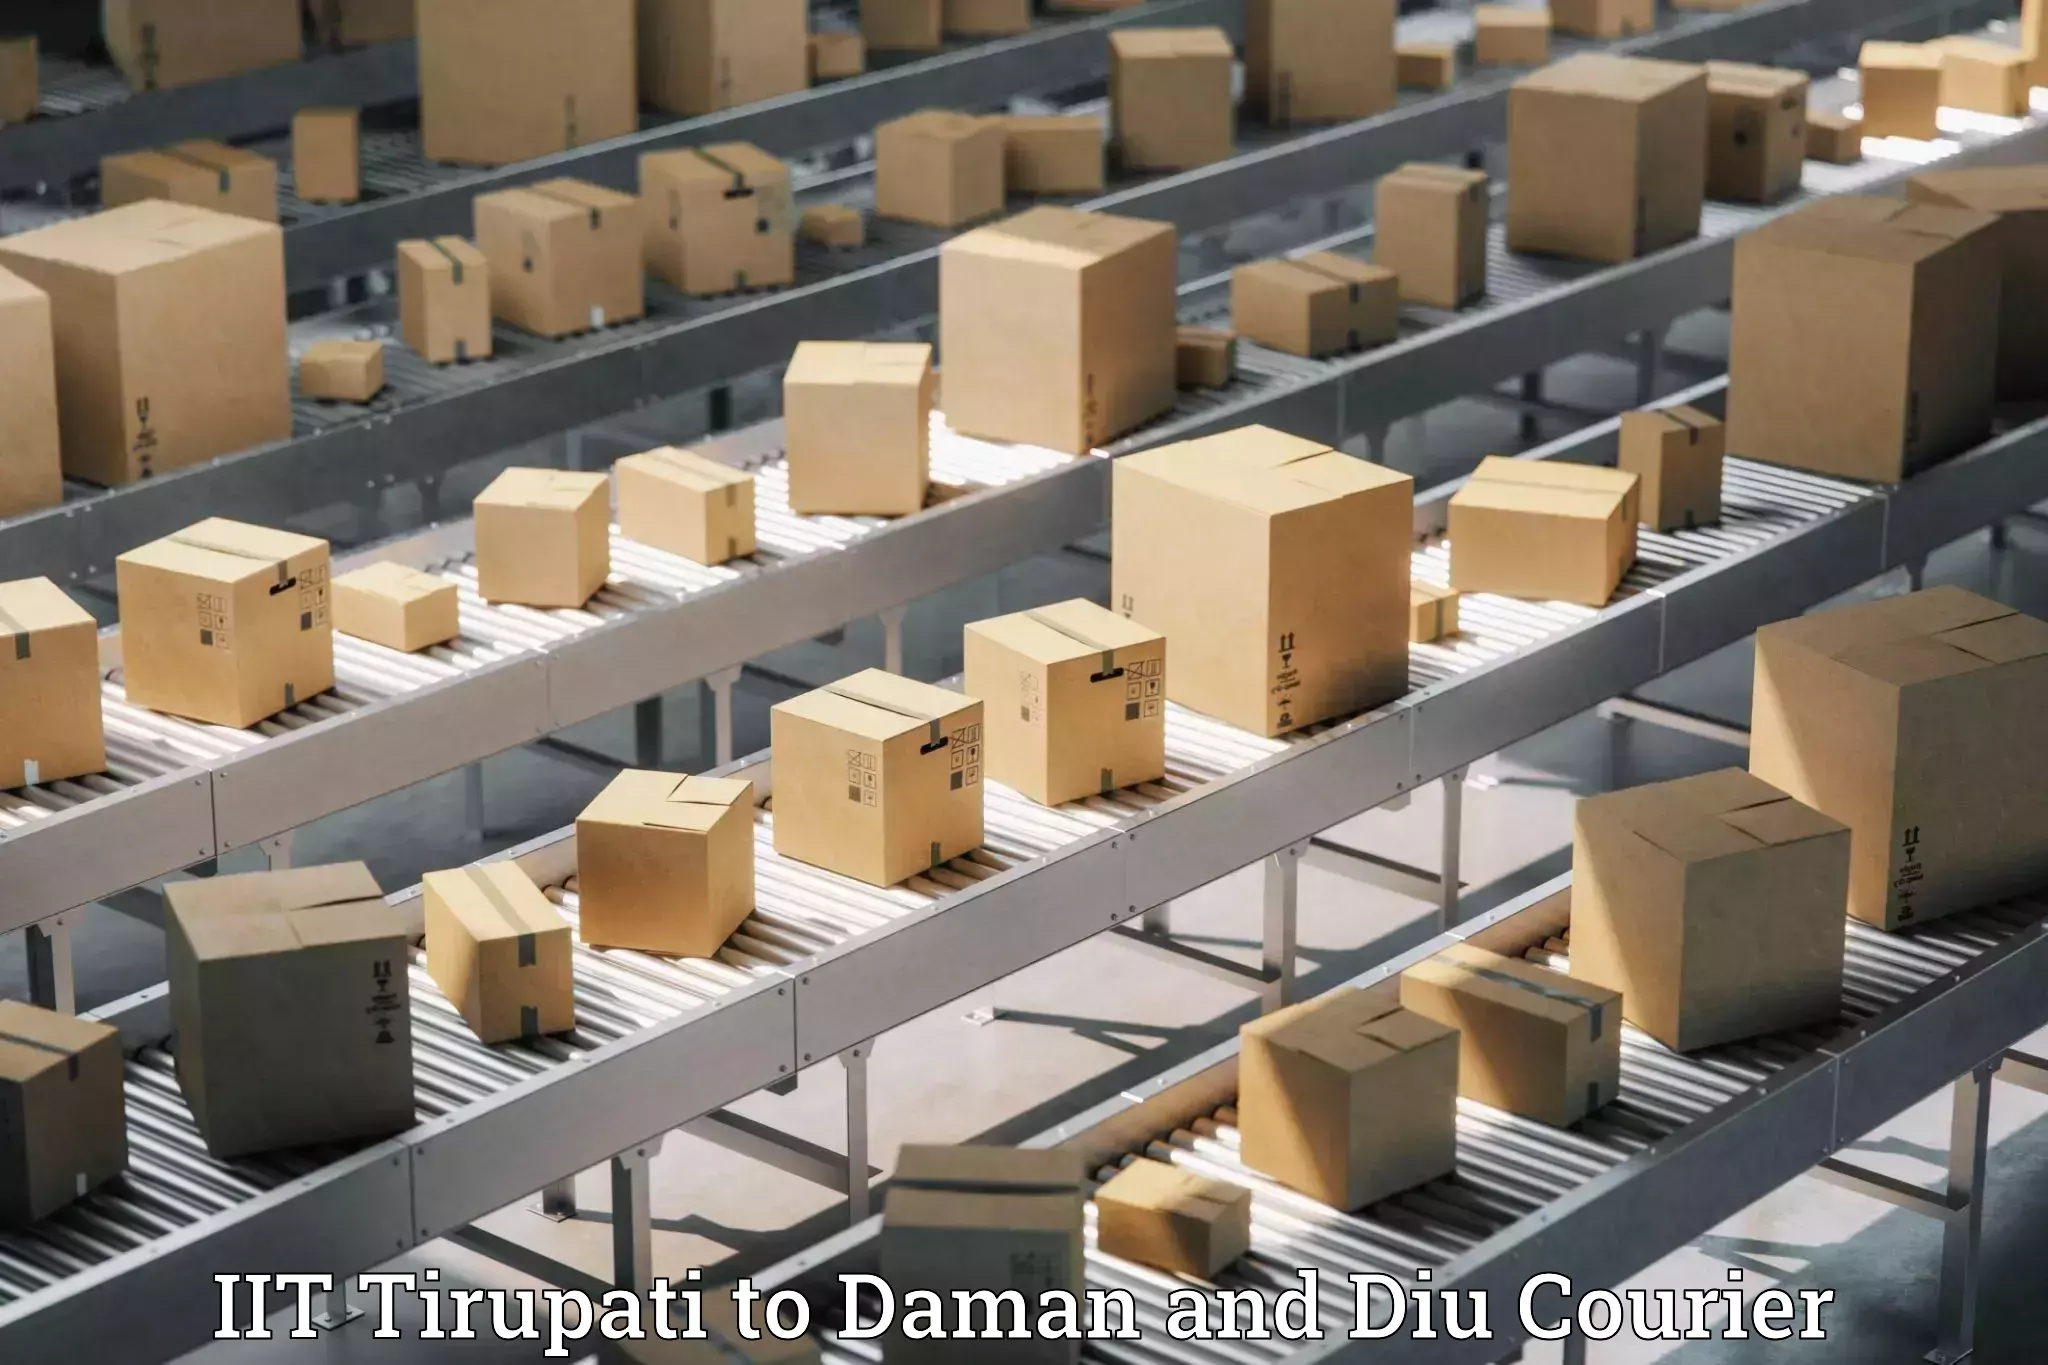 Specialized shipment handling IIT Tirupati to Daman and Diu